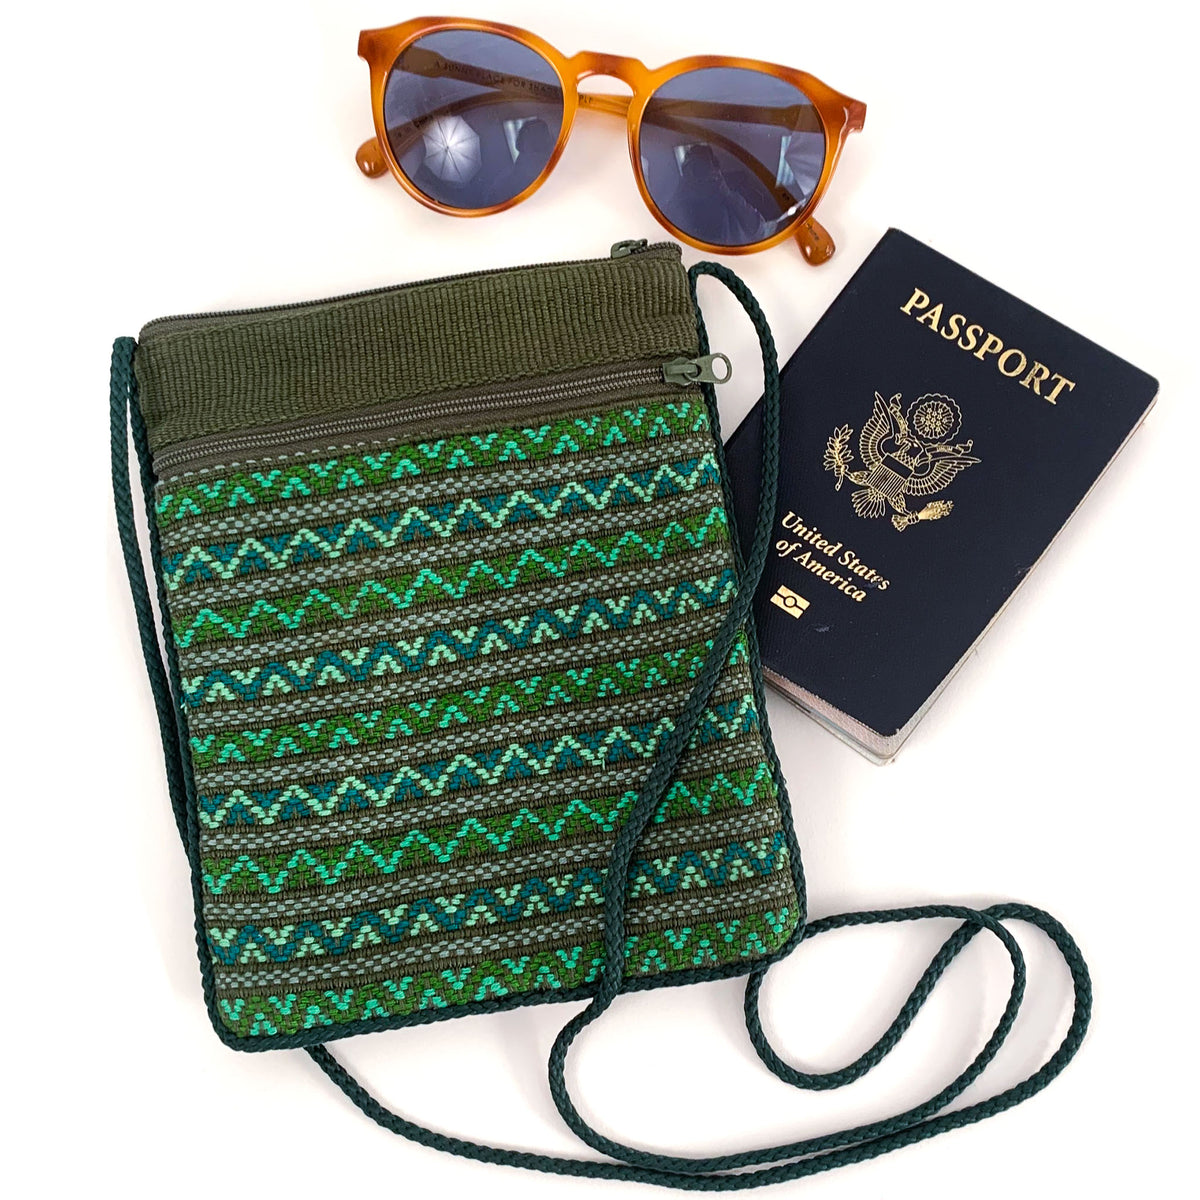 handwoven brocade pocket bag with passport and sunglasses